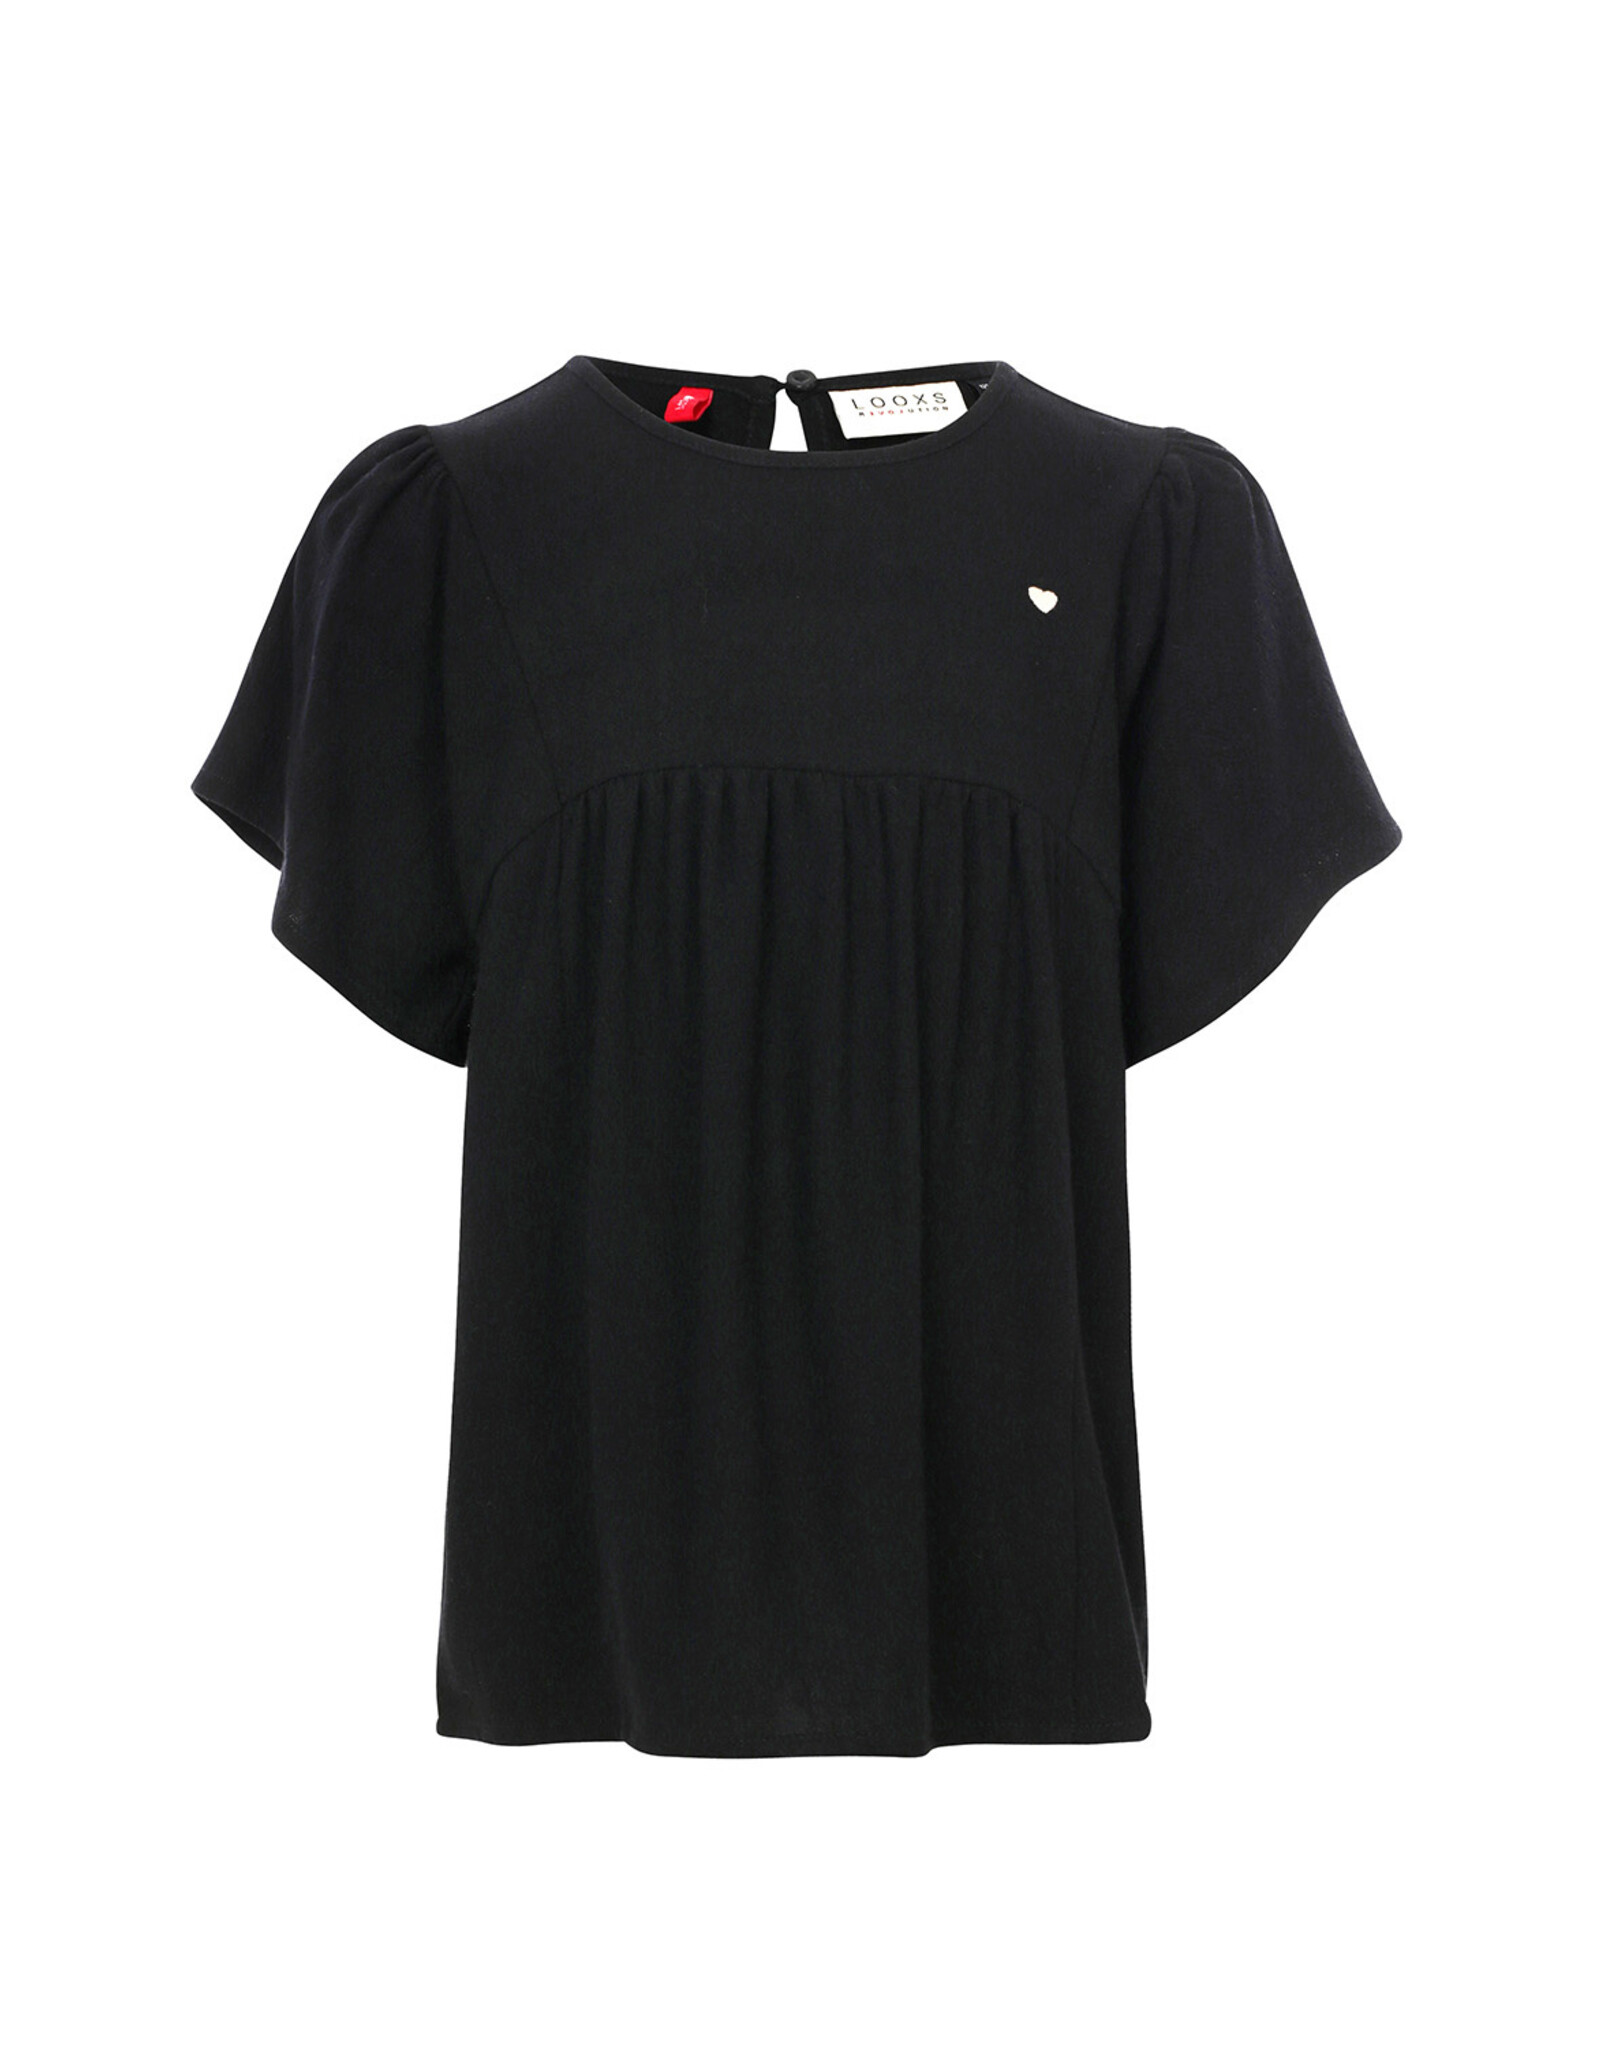 LOOXS Little blouses/tops Little top short sleeves black